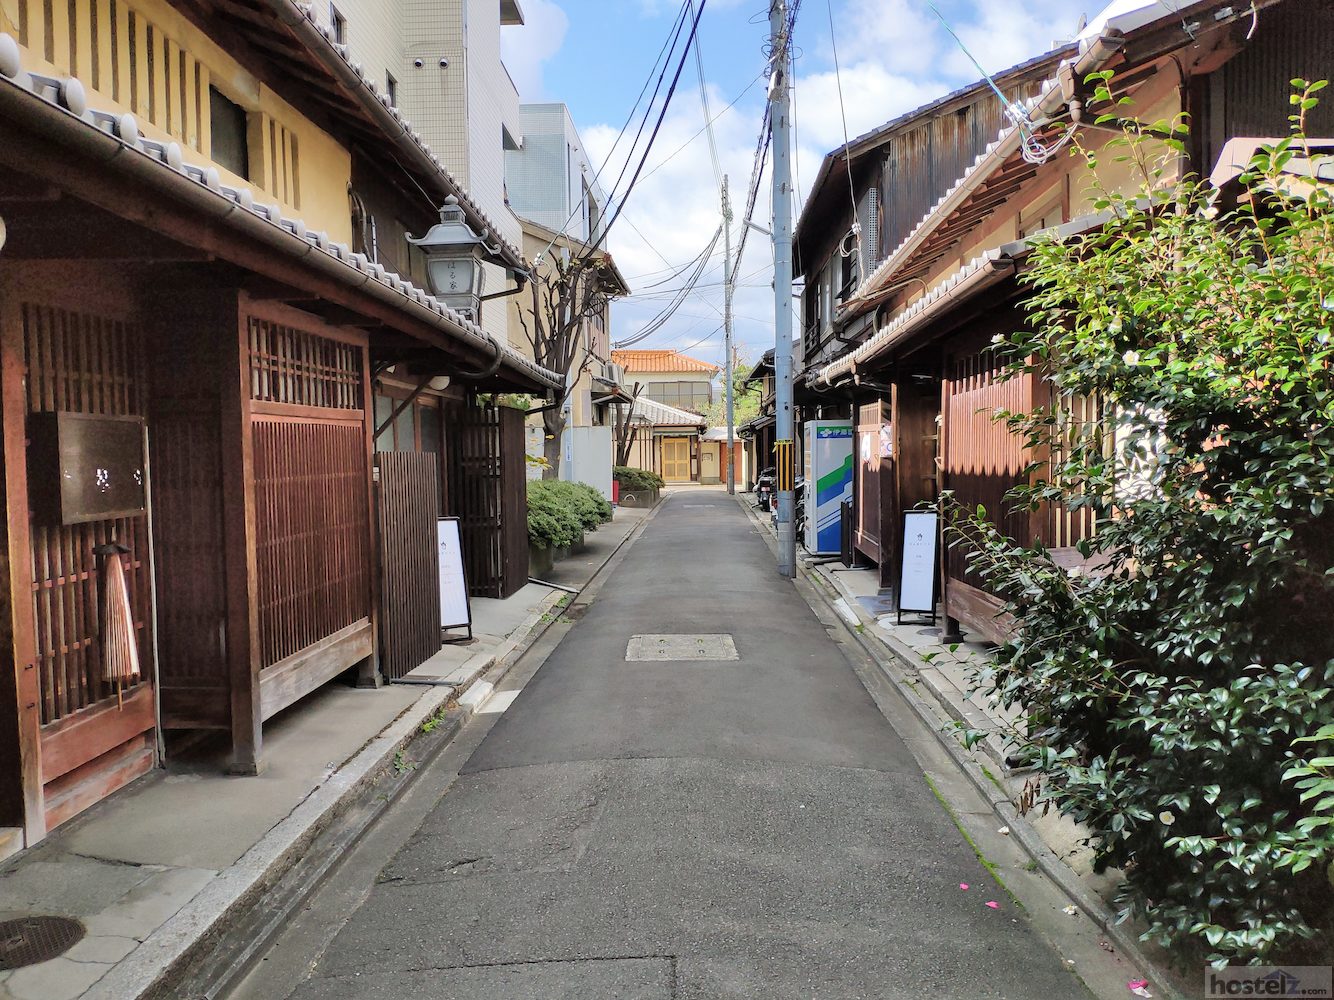 Street with Haruya hostel buildings on each side